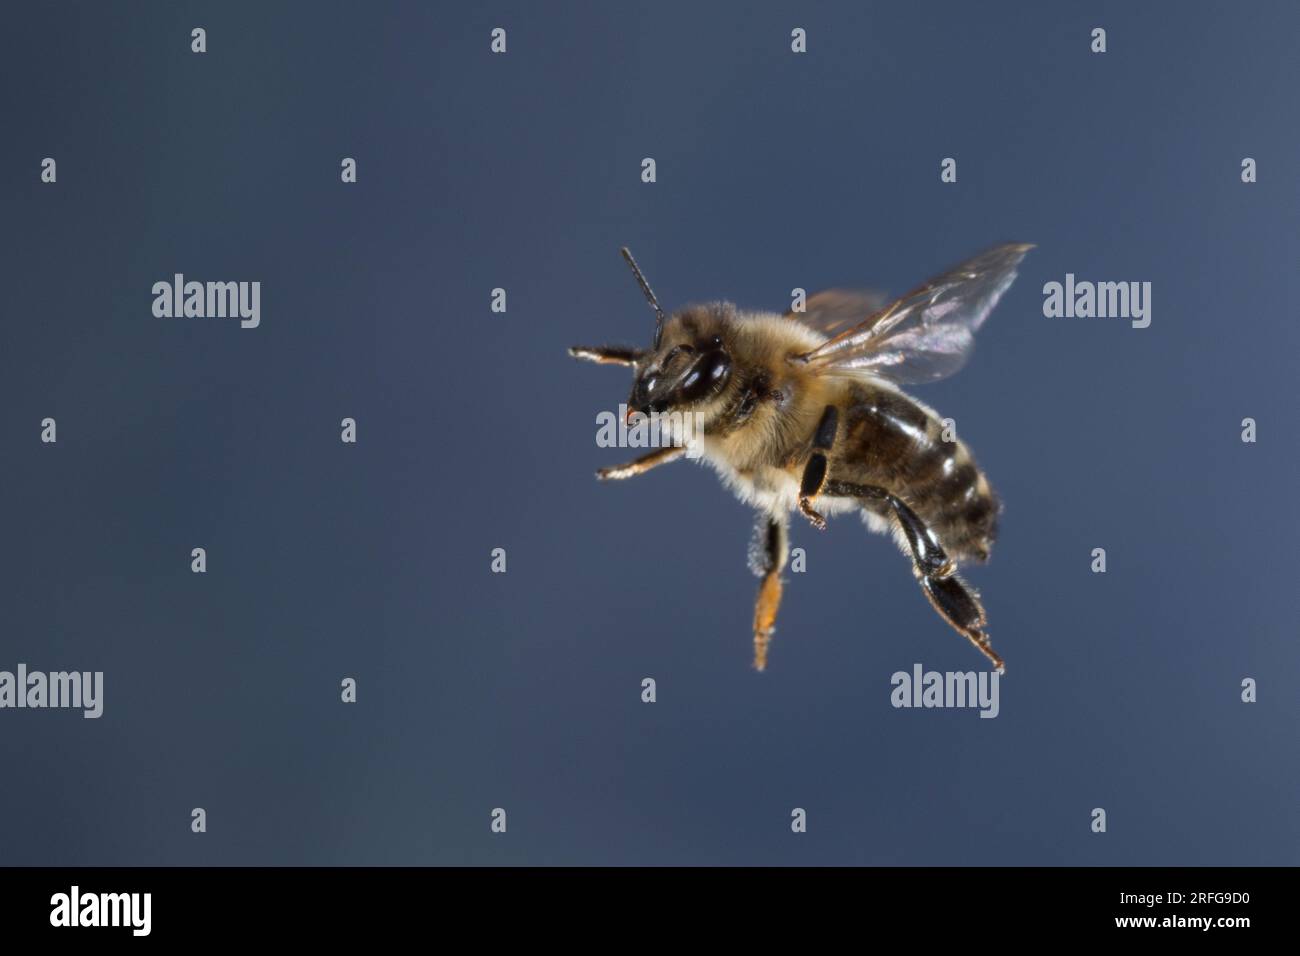 Honigbiene, Honig-Biene, Europäische Honigbiene, Westliche Honigbiene, Flug, fliegend, Biene, Bienen, Apis mellifera, Apis mellifica, honey bee, hive Stock Photo